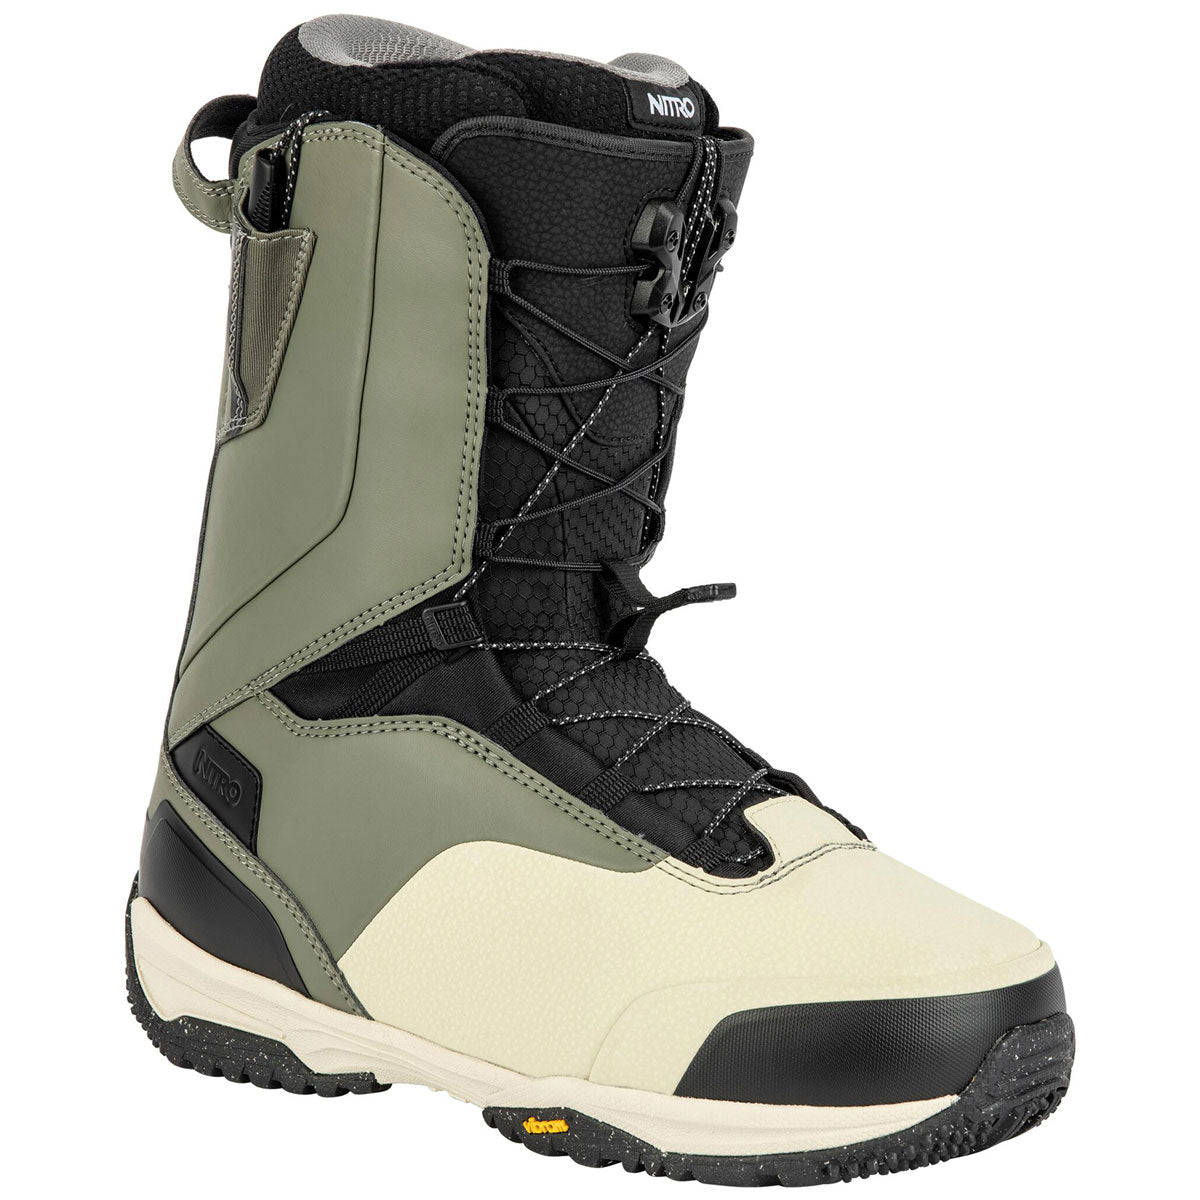 Nitro Venture Pro Tls 2023 Snowboard Boots - Gravity Grey/Sand